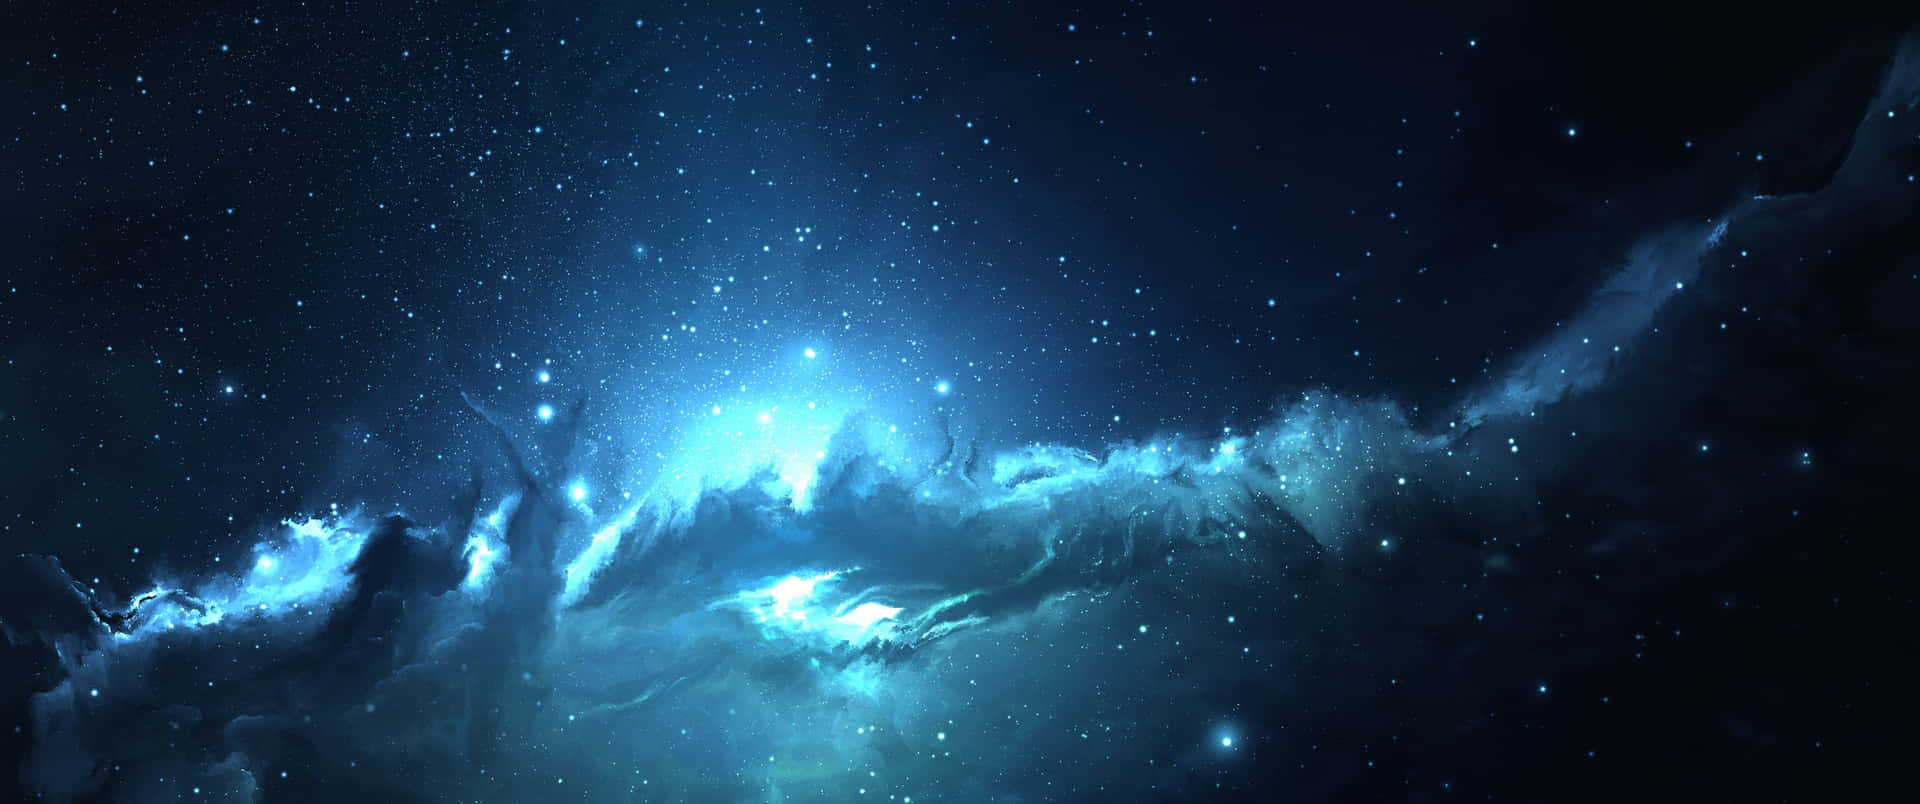 Fernegalaxien Unter Dem Nachthimmel Wallpaper